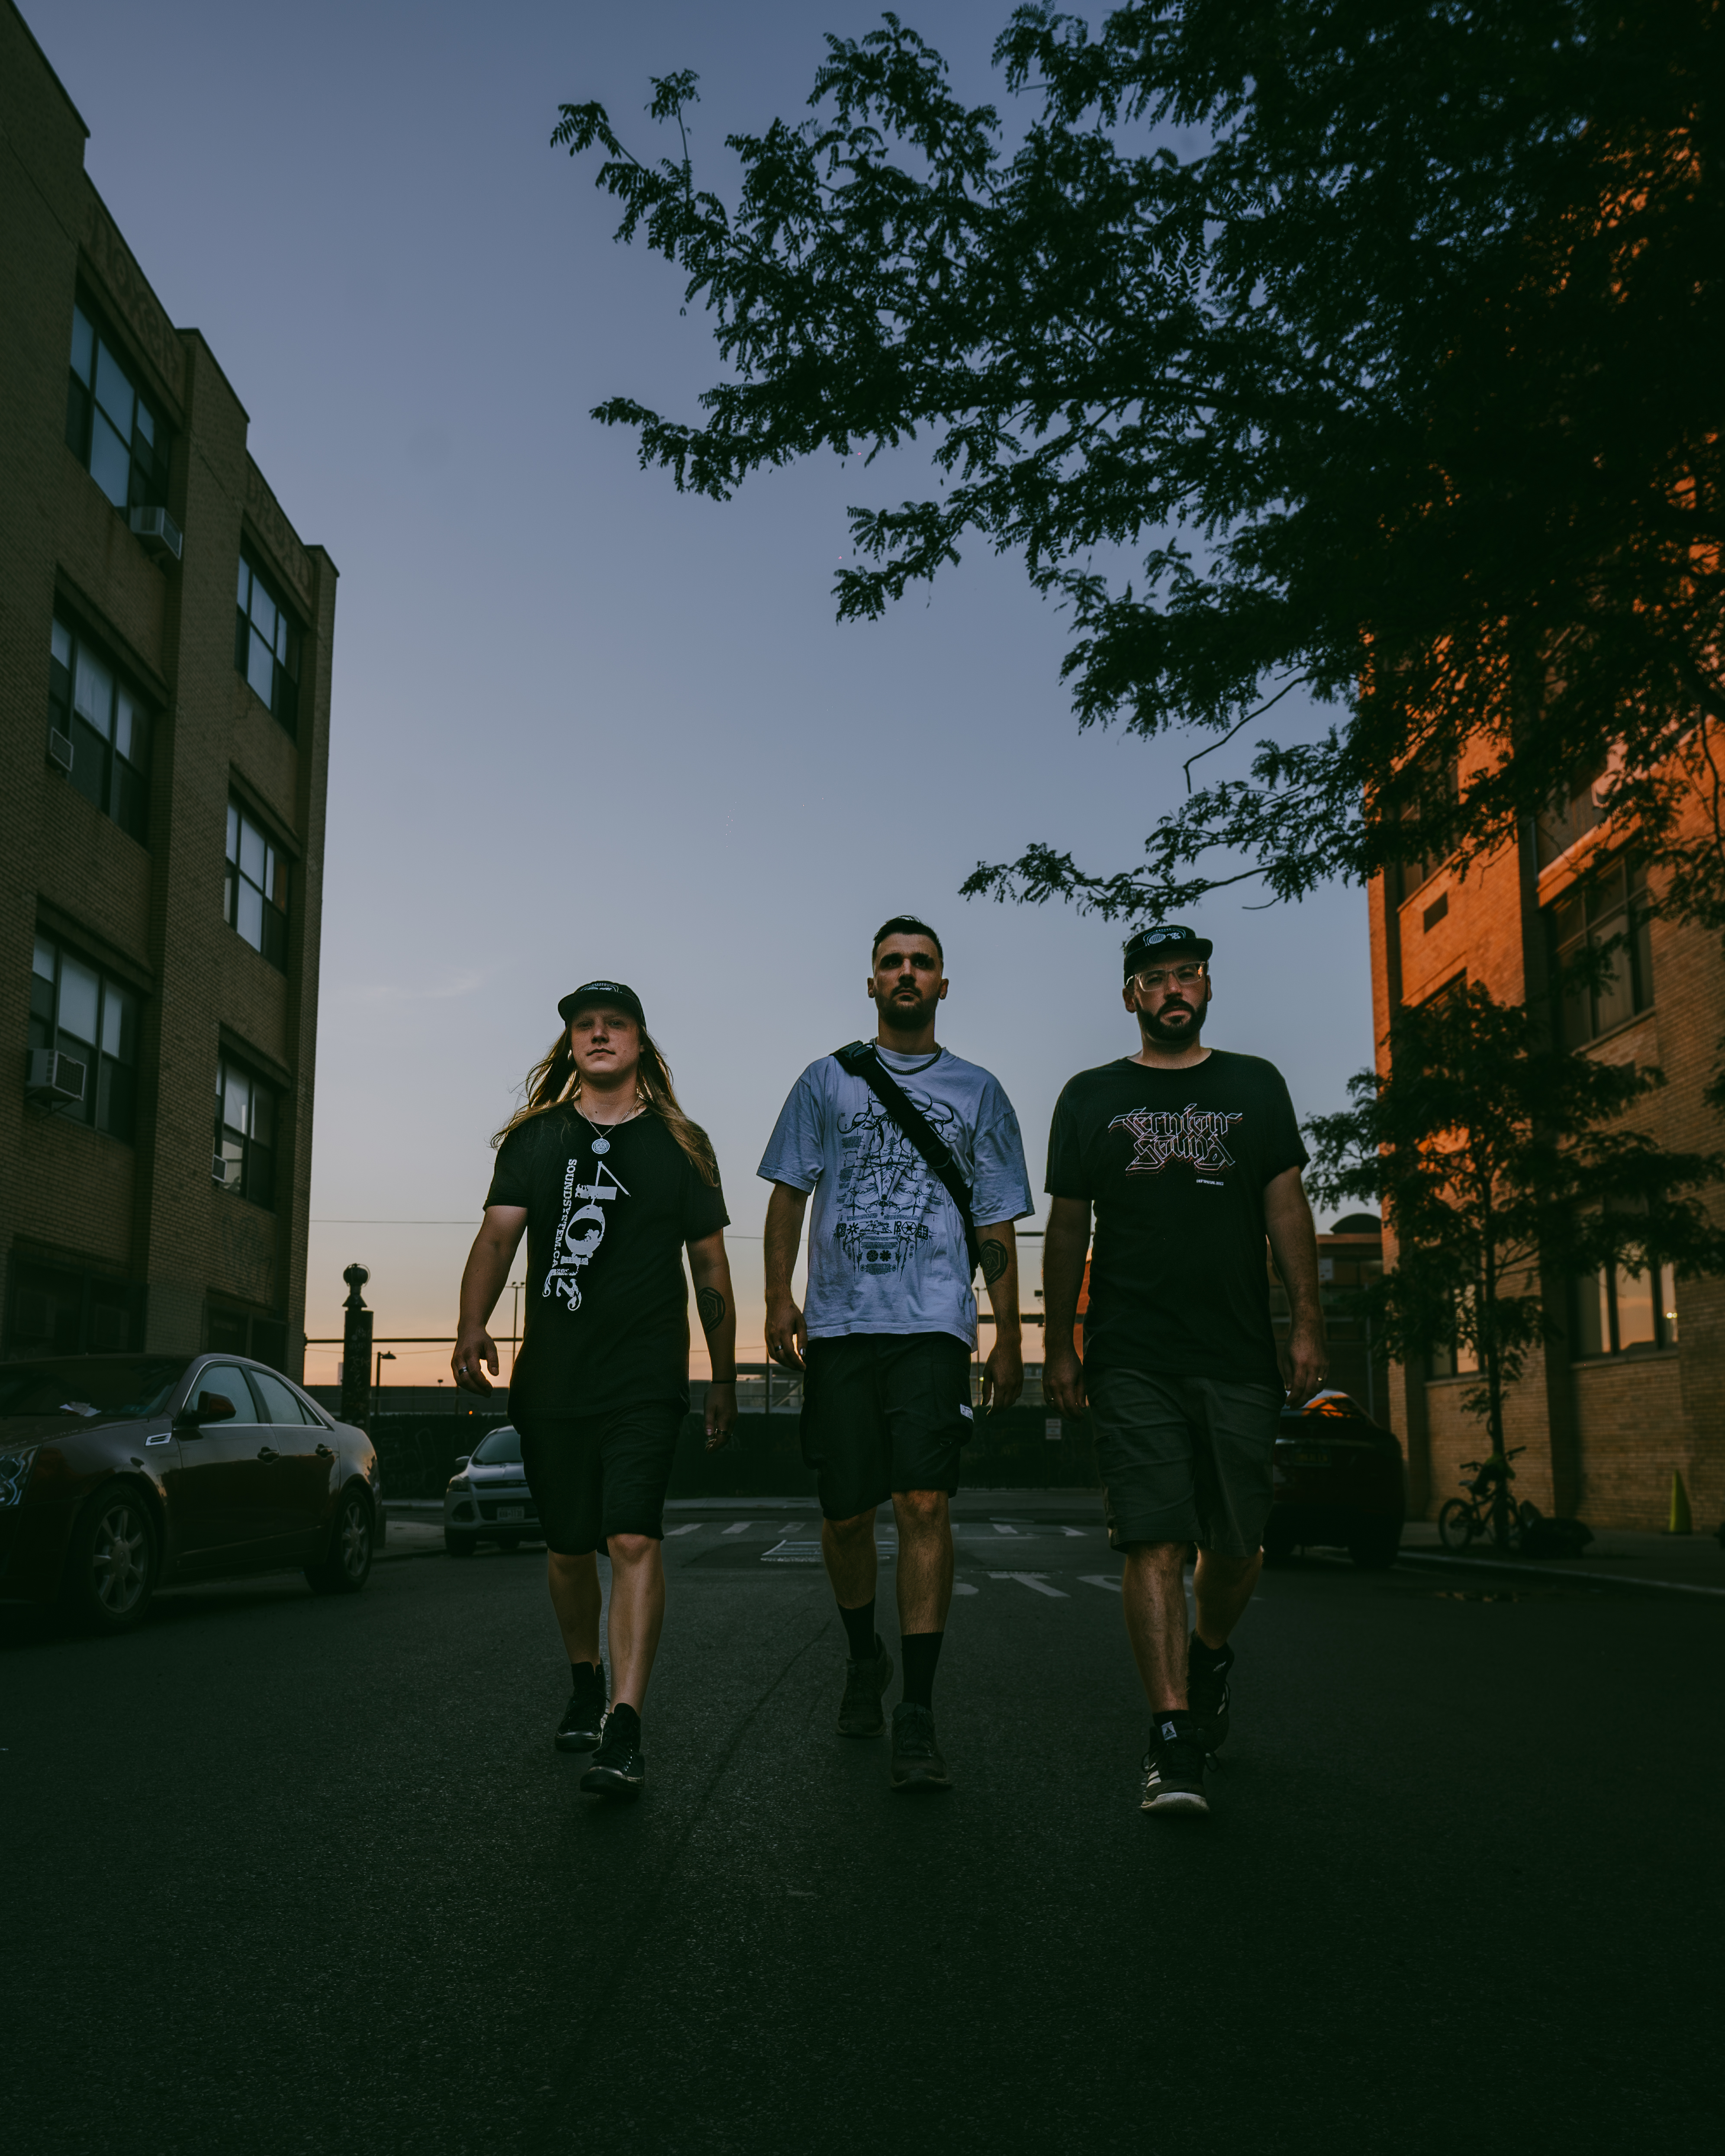 Ternion sound trio walking on the street during sunset